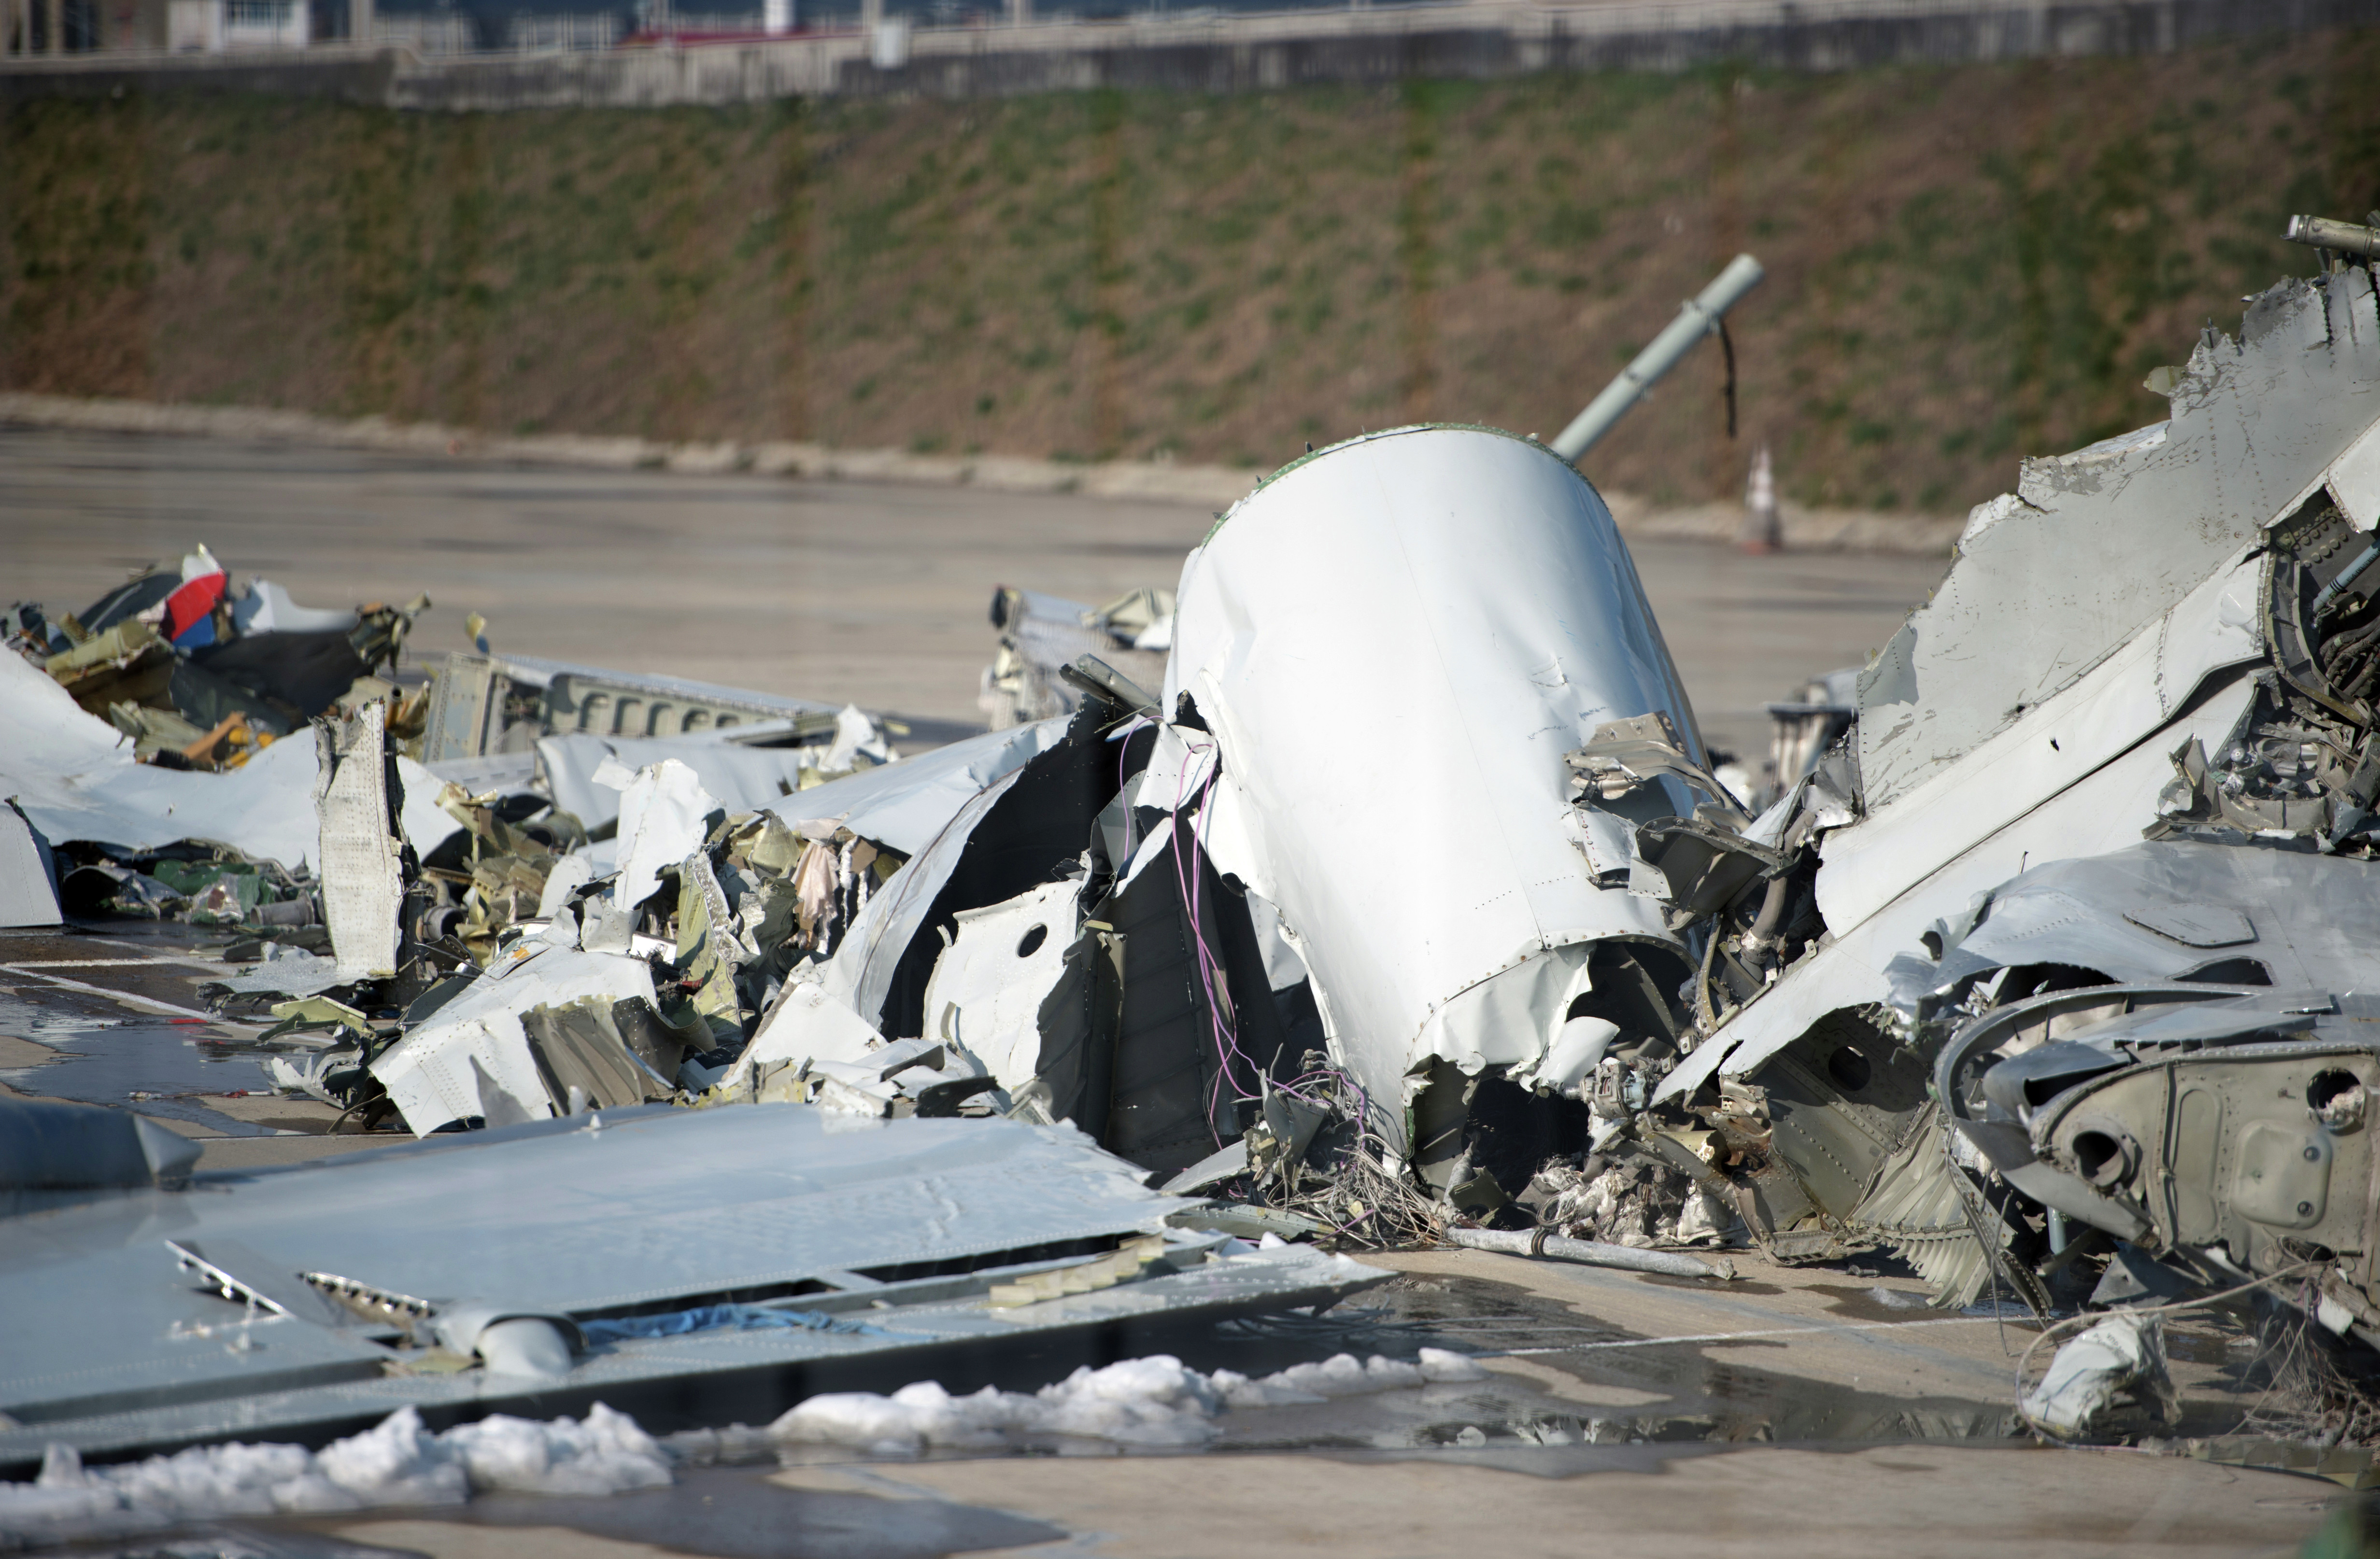 Трагедия авиакатастрофа. Катастрофа ту-154 под Сочи. Крушение ту 154 в Сочи. Ту 154 катастрофа Сочи 2016. Катастро́фа ту-154 под Со́чи.